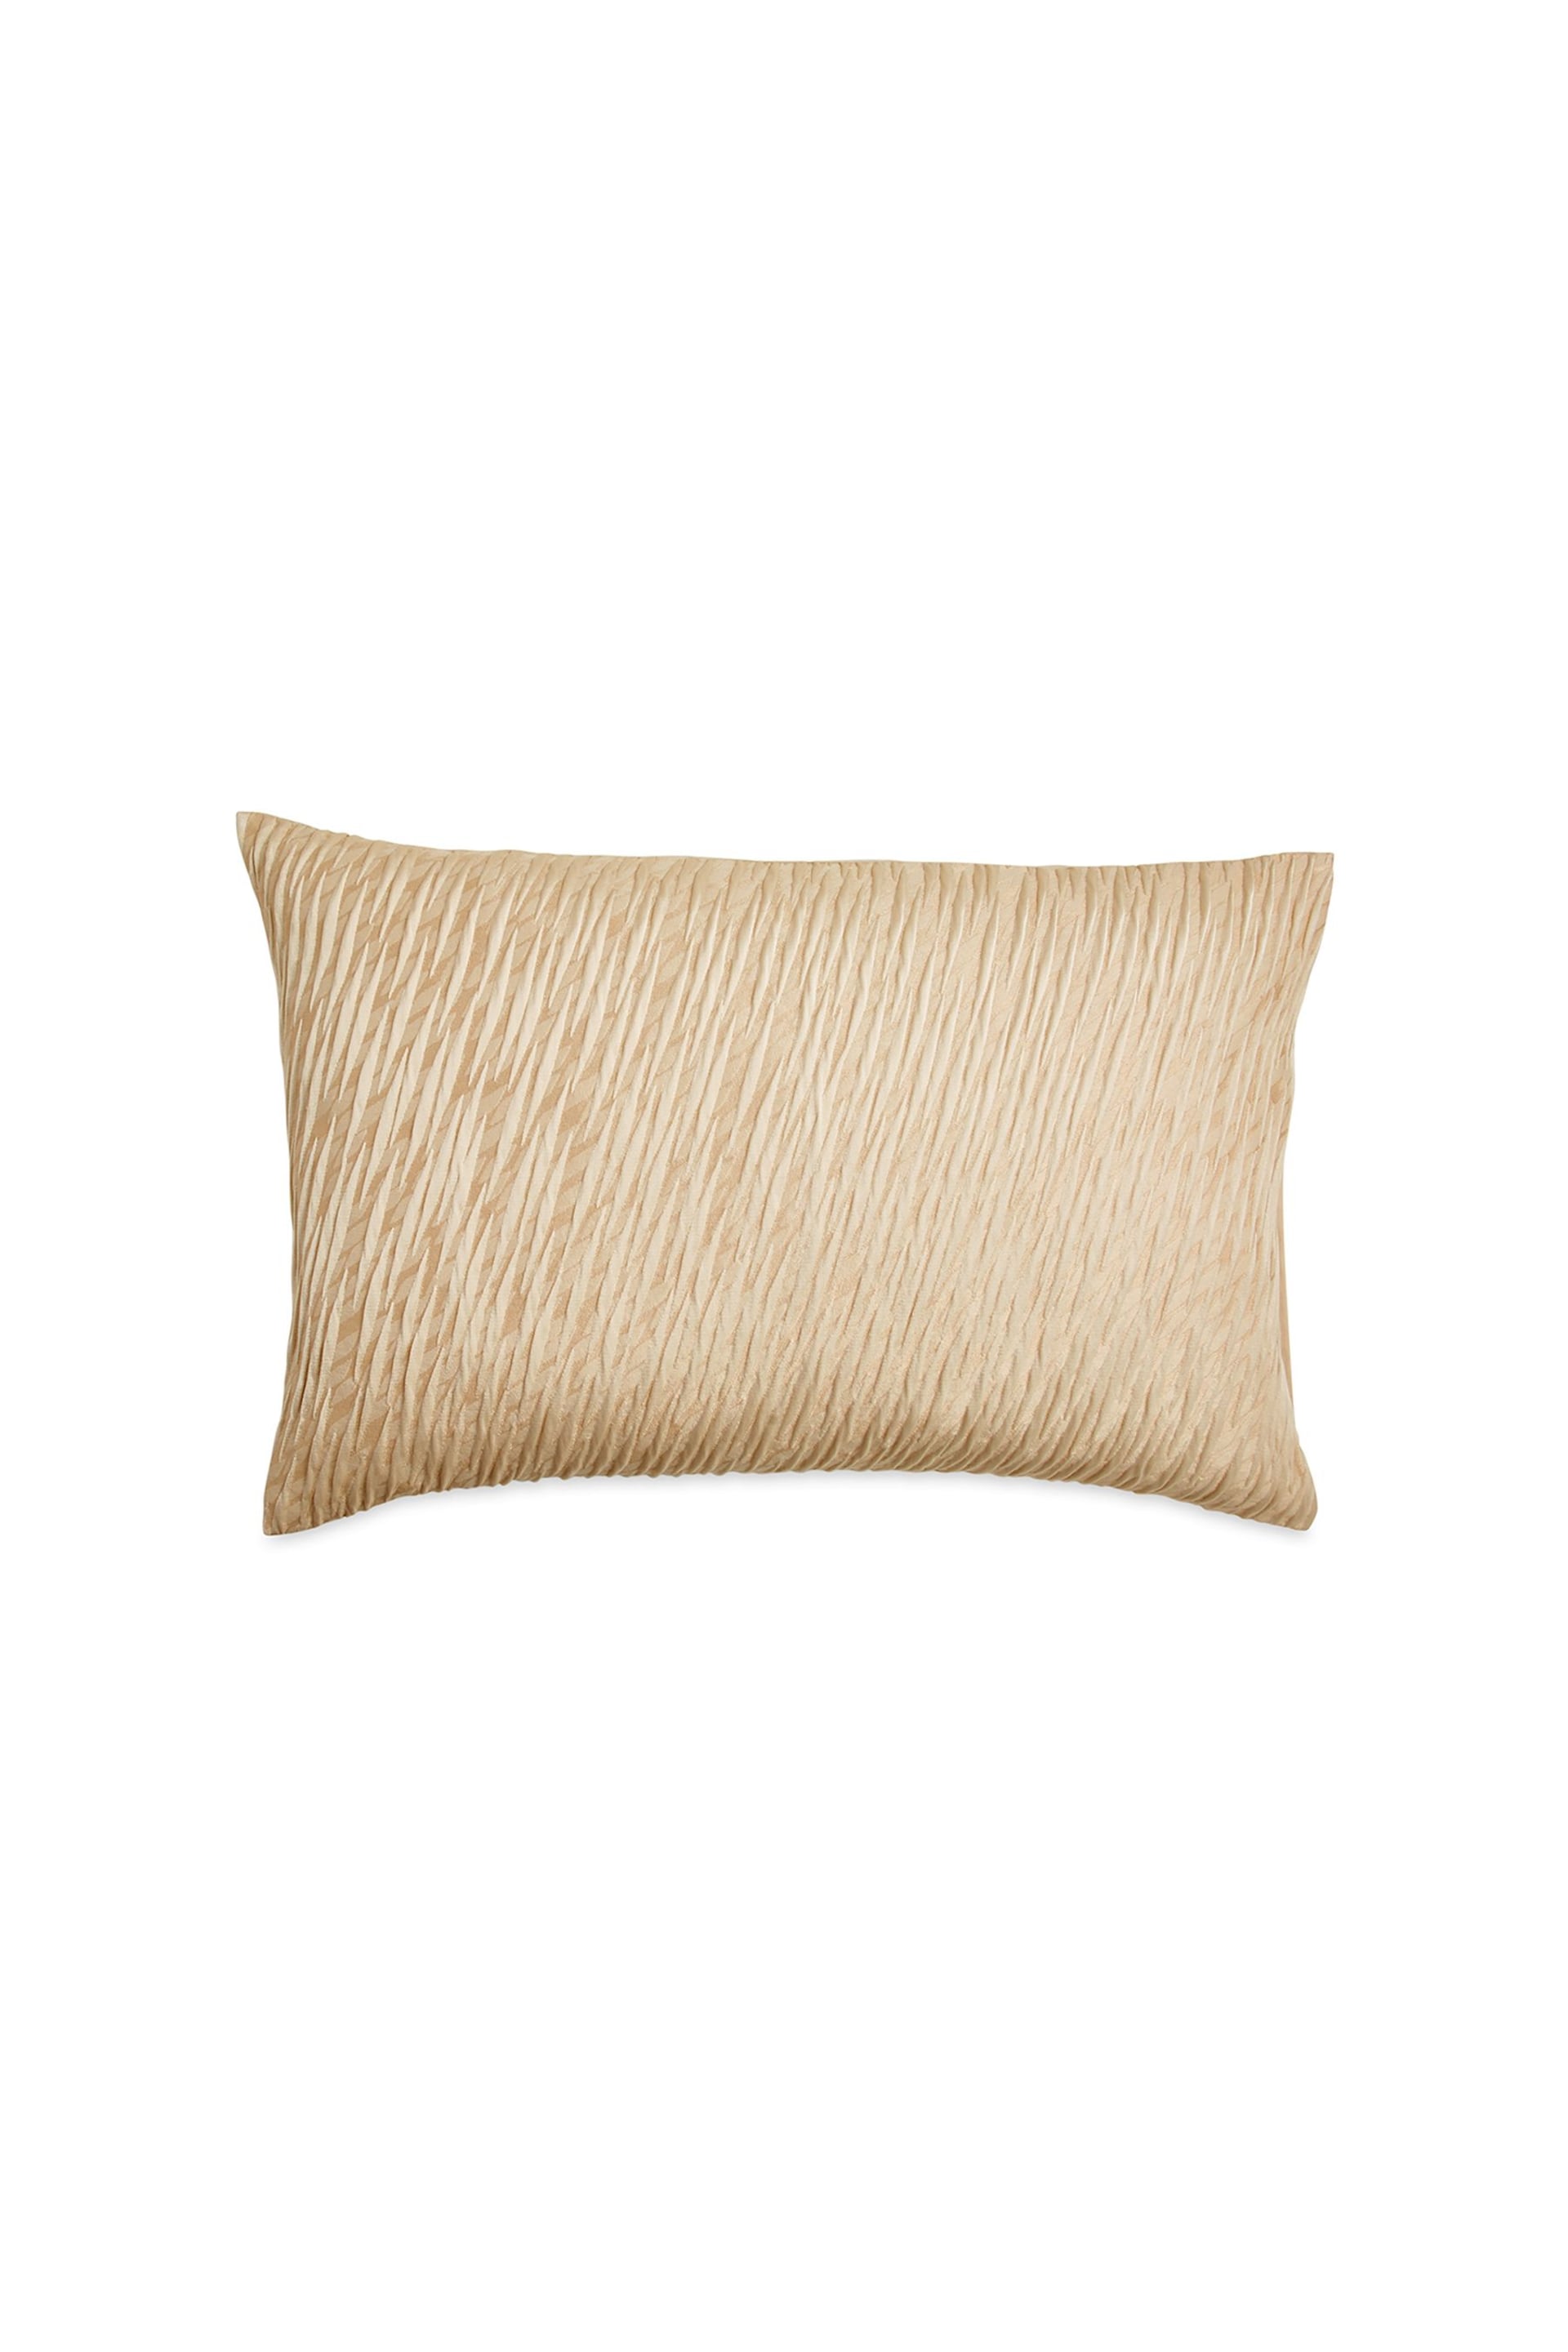 Donna Karan Gold Dust Pillowcase - Image 3 of 3